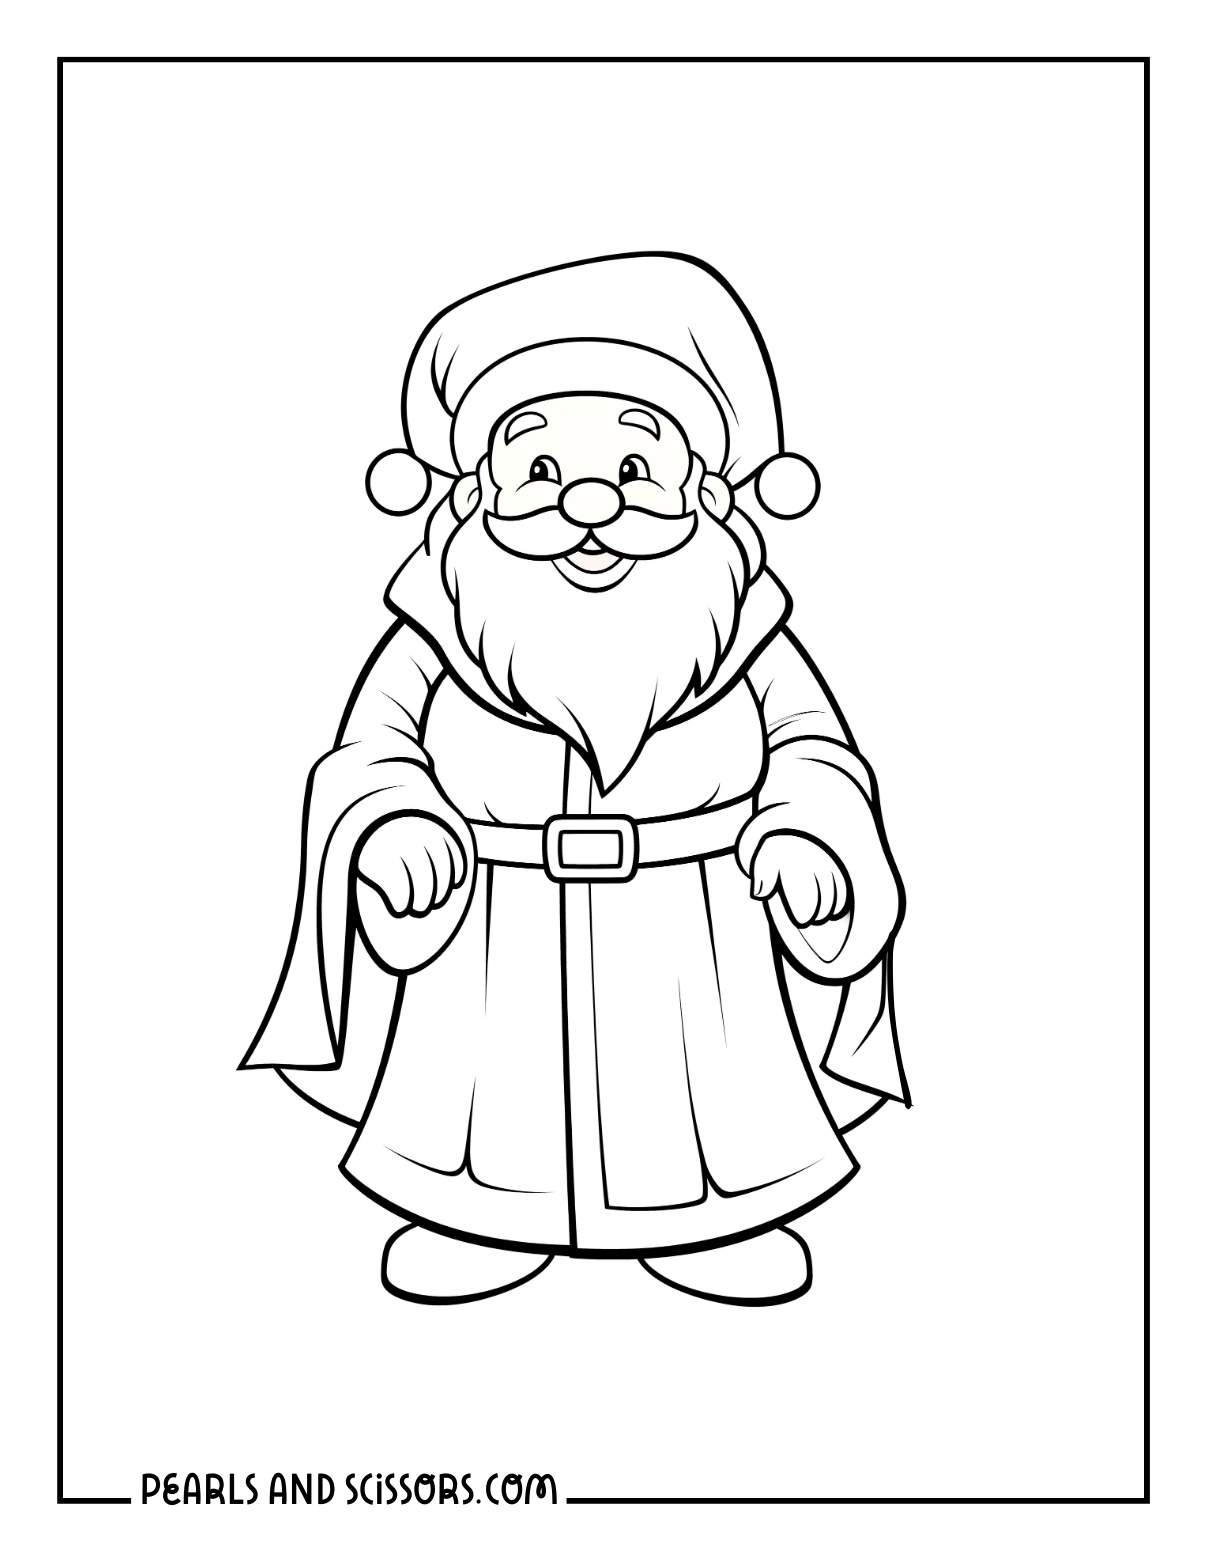 St. Nicholas as Santa Claus christmas nativity coloring page.